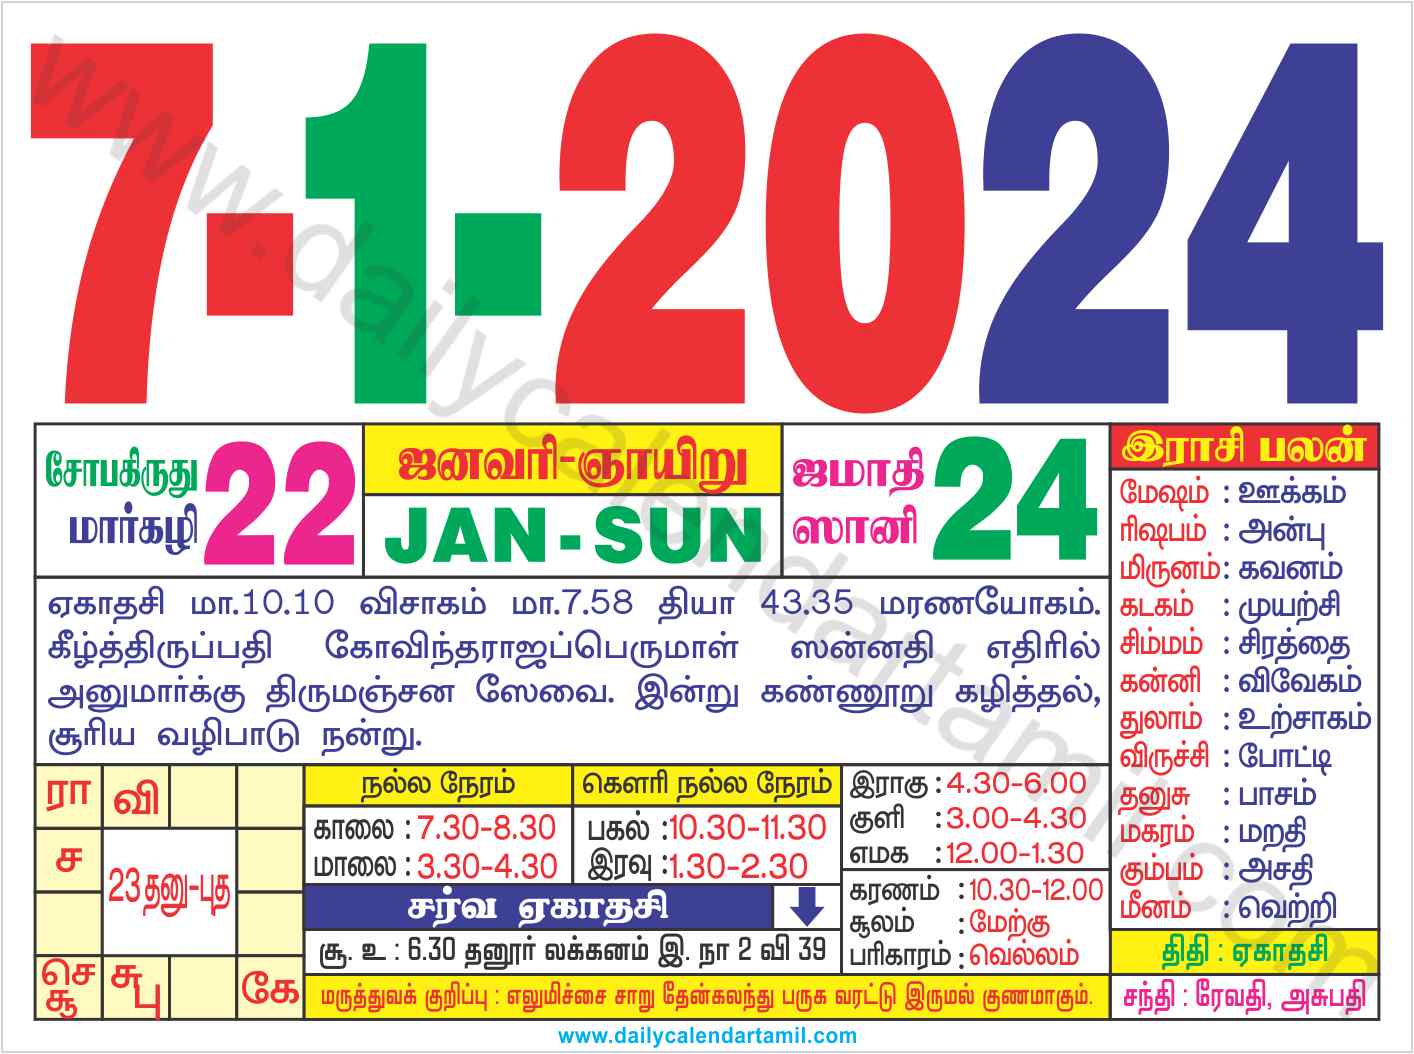 Daily Calendar 2022 Tamil Calendar January 2022 | தமிழ் காலண்டர் 2022